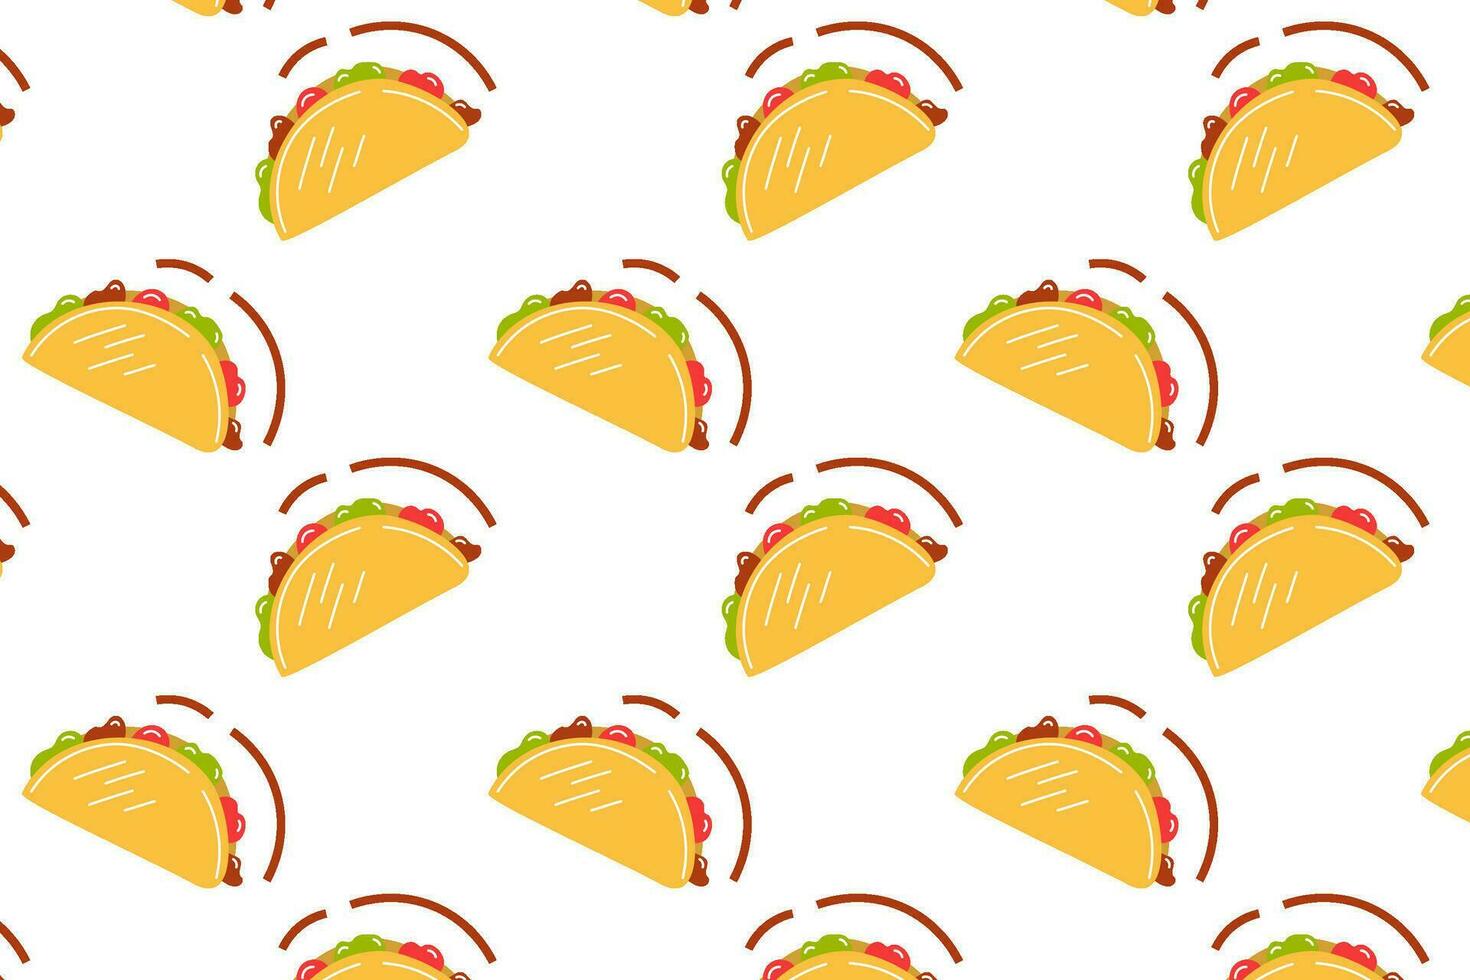 burrito, Quesadilla, mexicano comida modelo en un blanco antecedentes. patrón, sin costura dibujos animados estilo taco modelo. mexicano alimento. vector